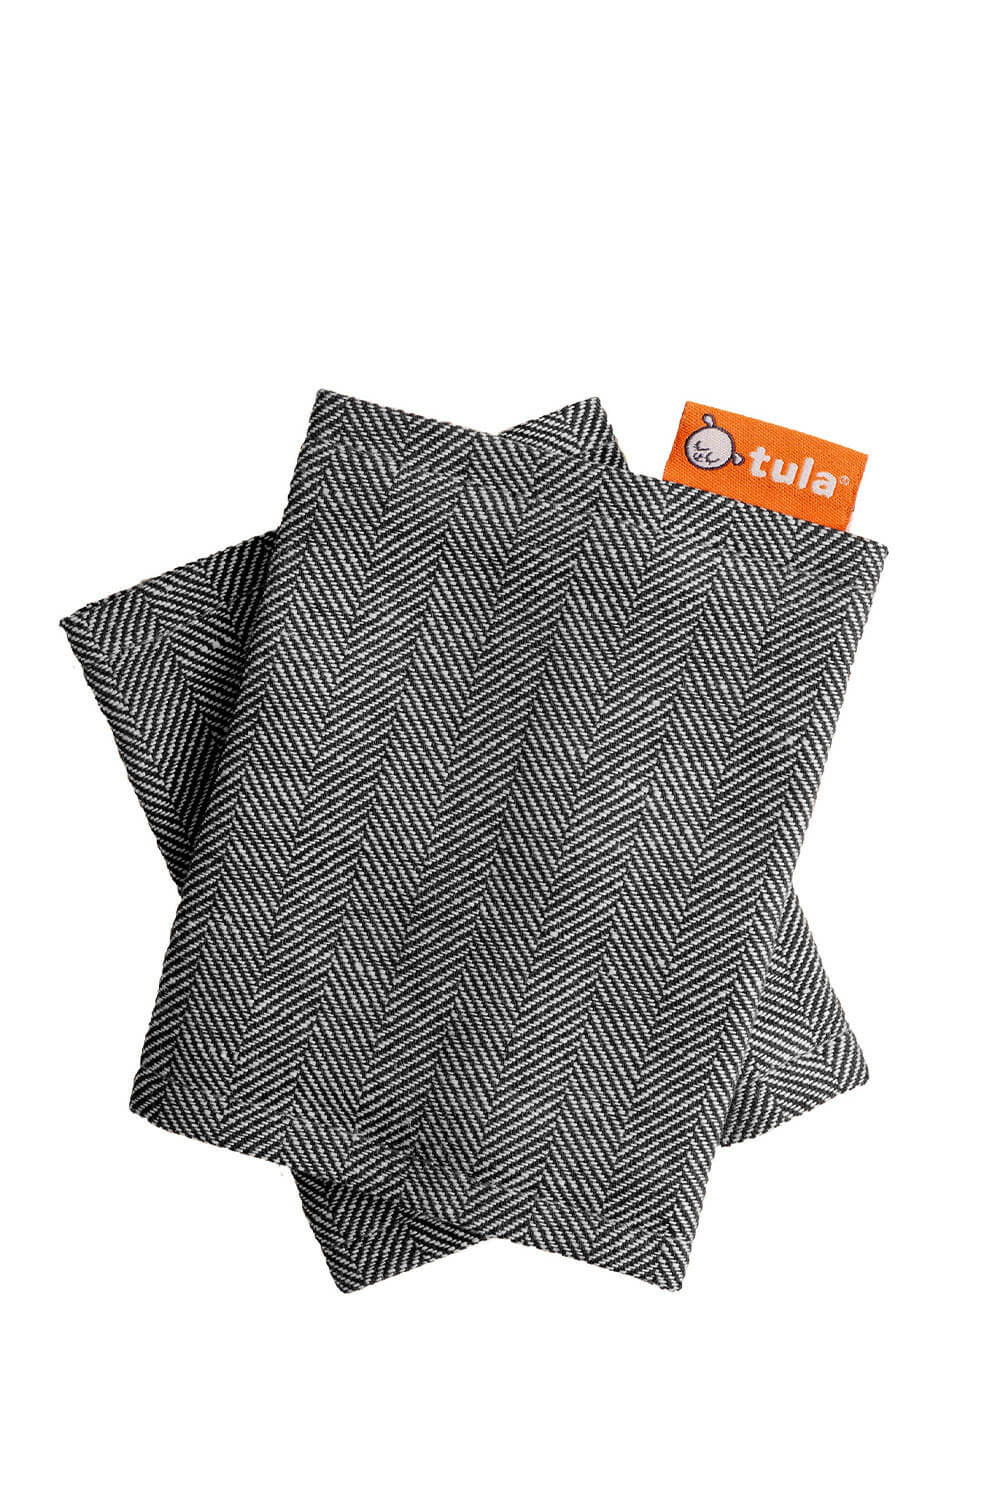 Tula Ash Linen Strap Covers.